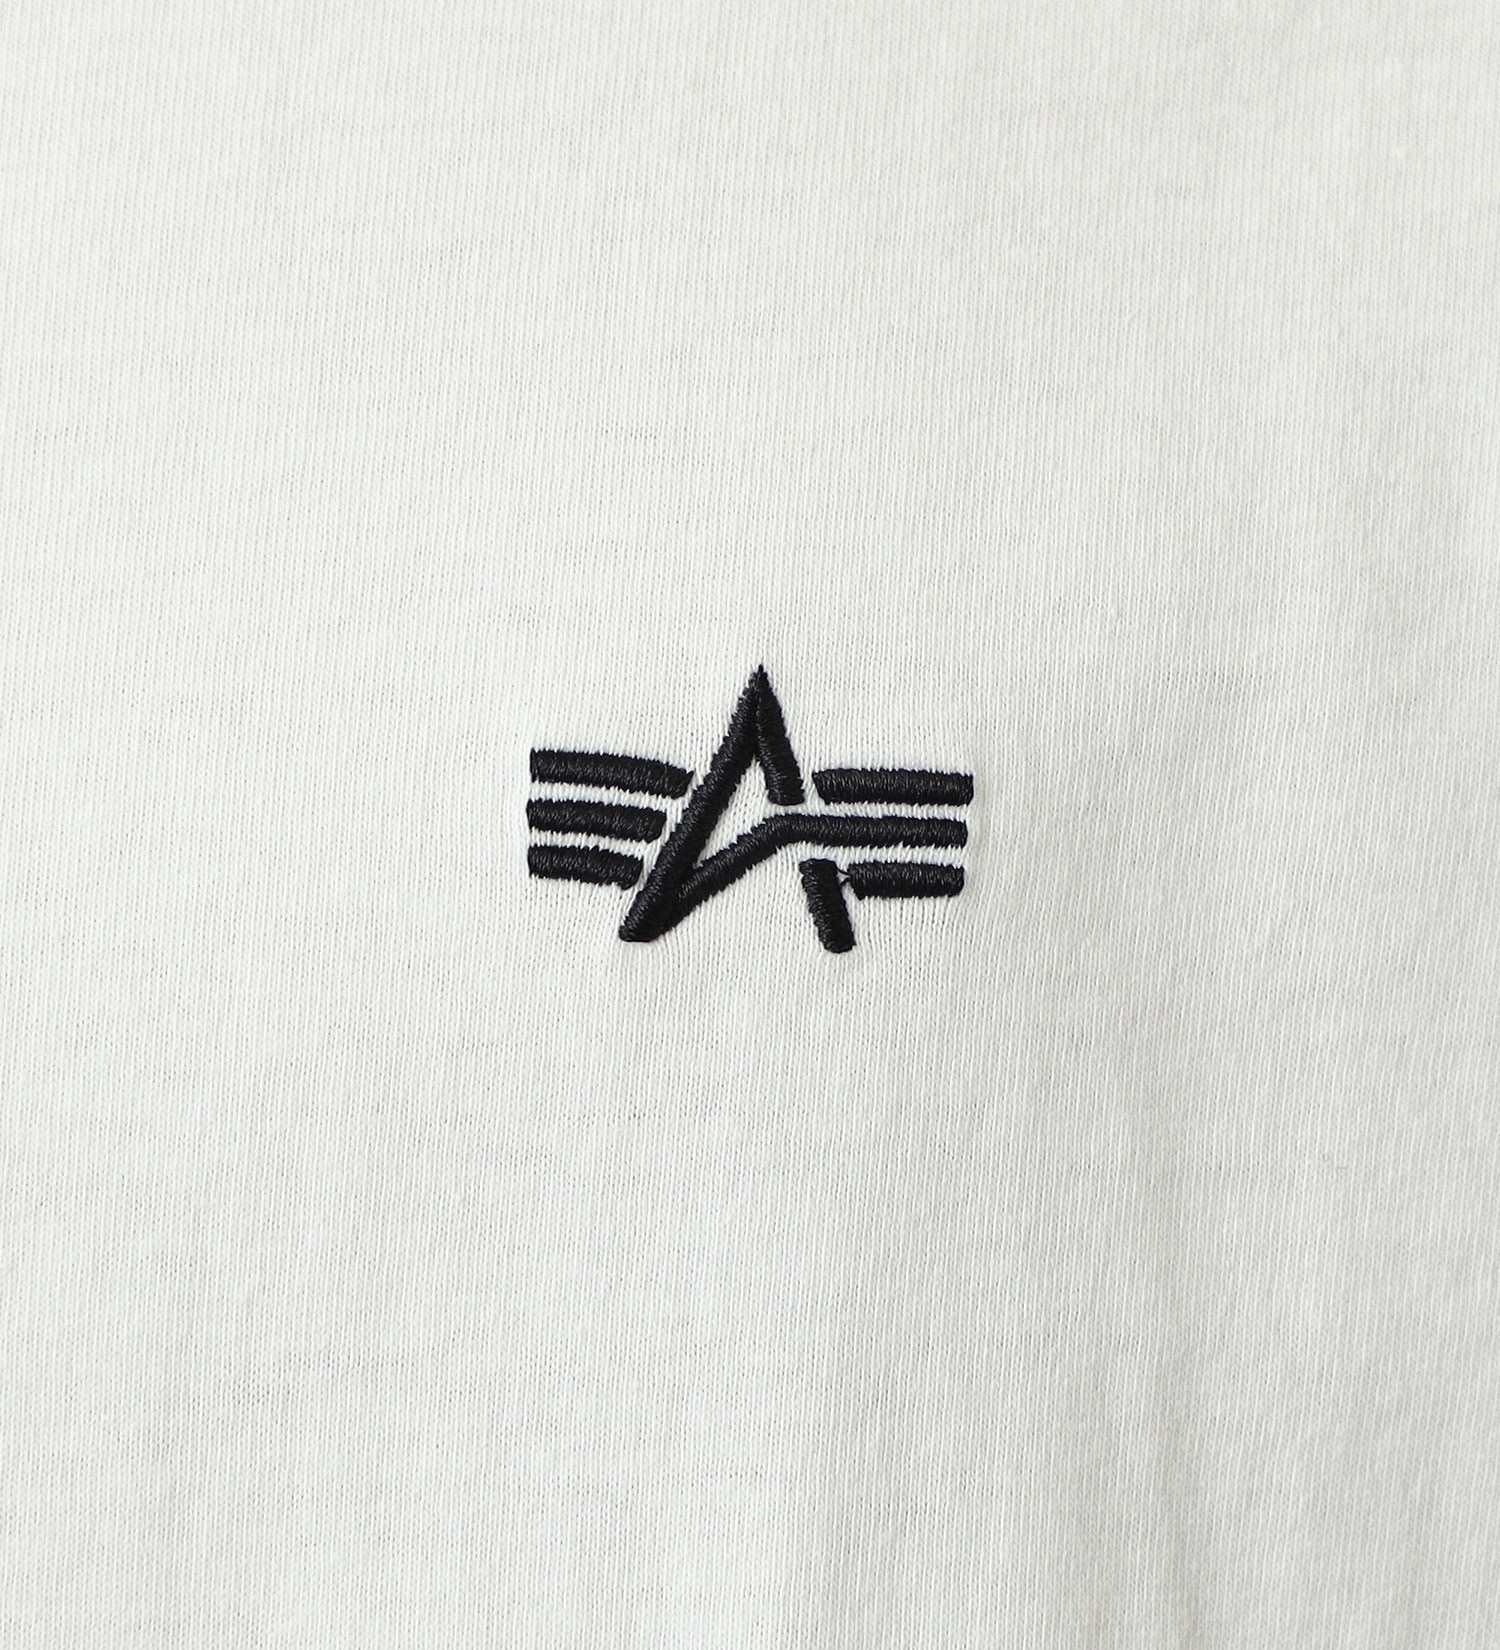 ALPHA(アルファ)の【GW SALE】バックプリントボックスロゴ 長袖Tシャツ(COCKPIT)|トップス/Tシャツ/カットソー/メンズ|ホワイト